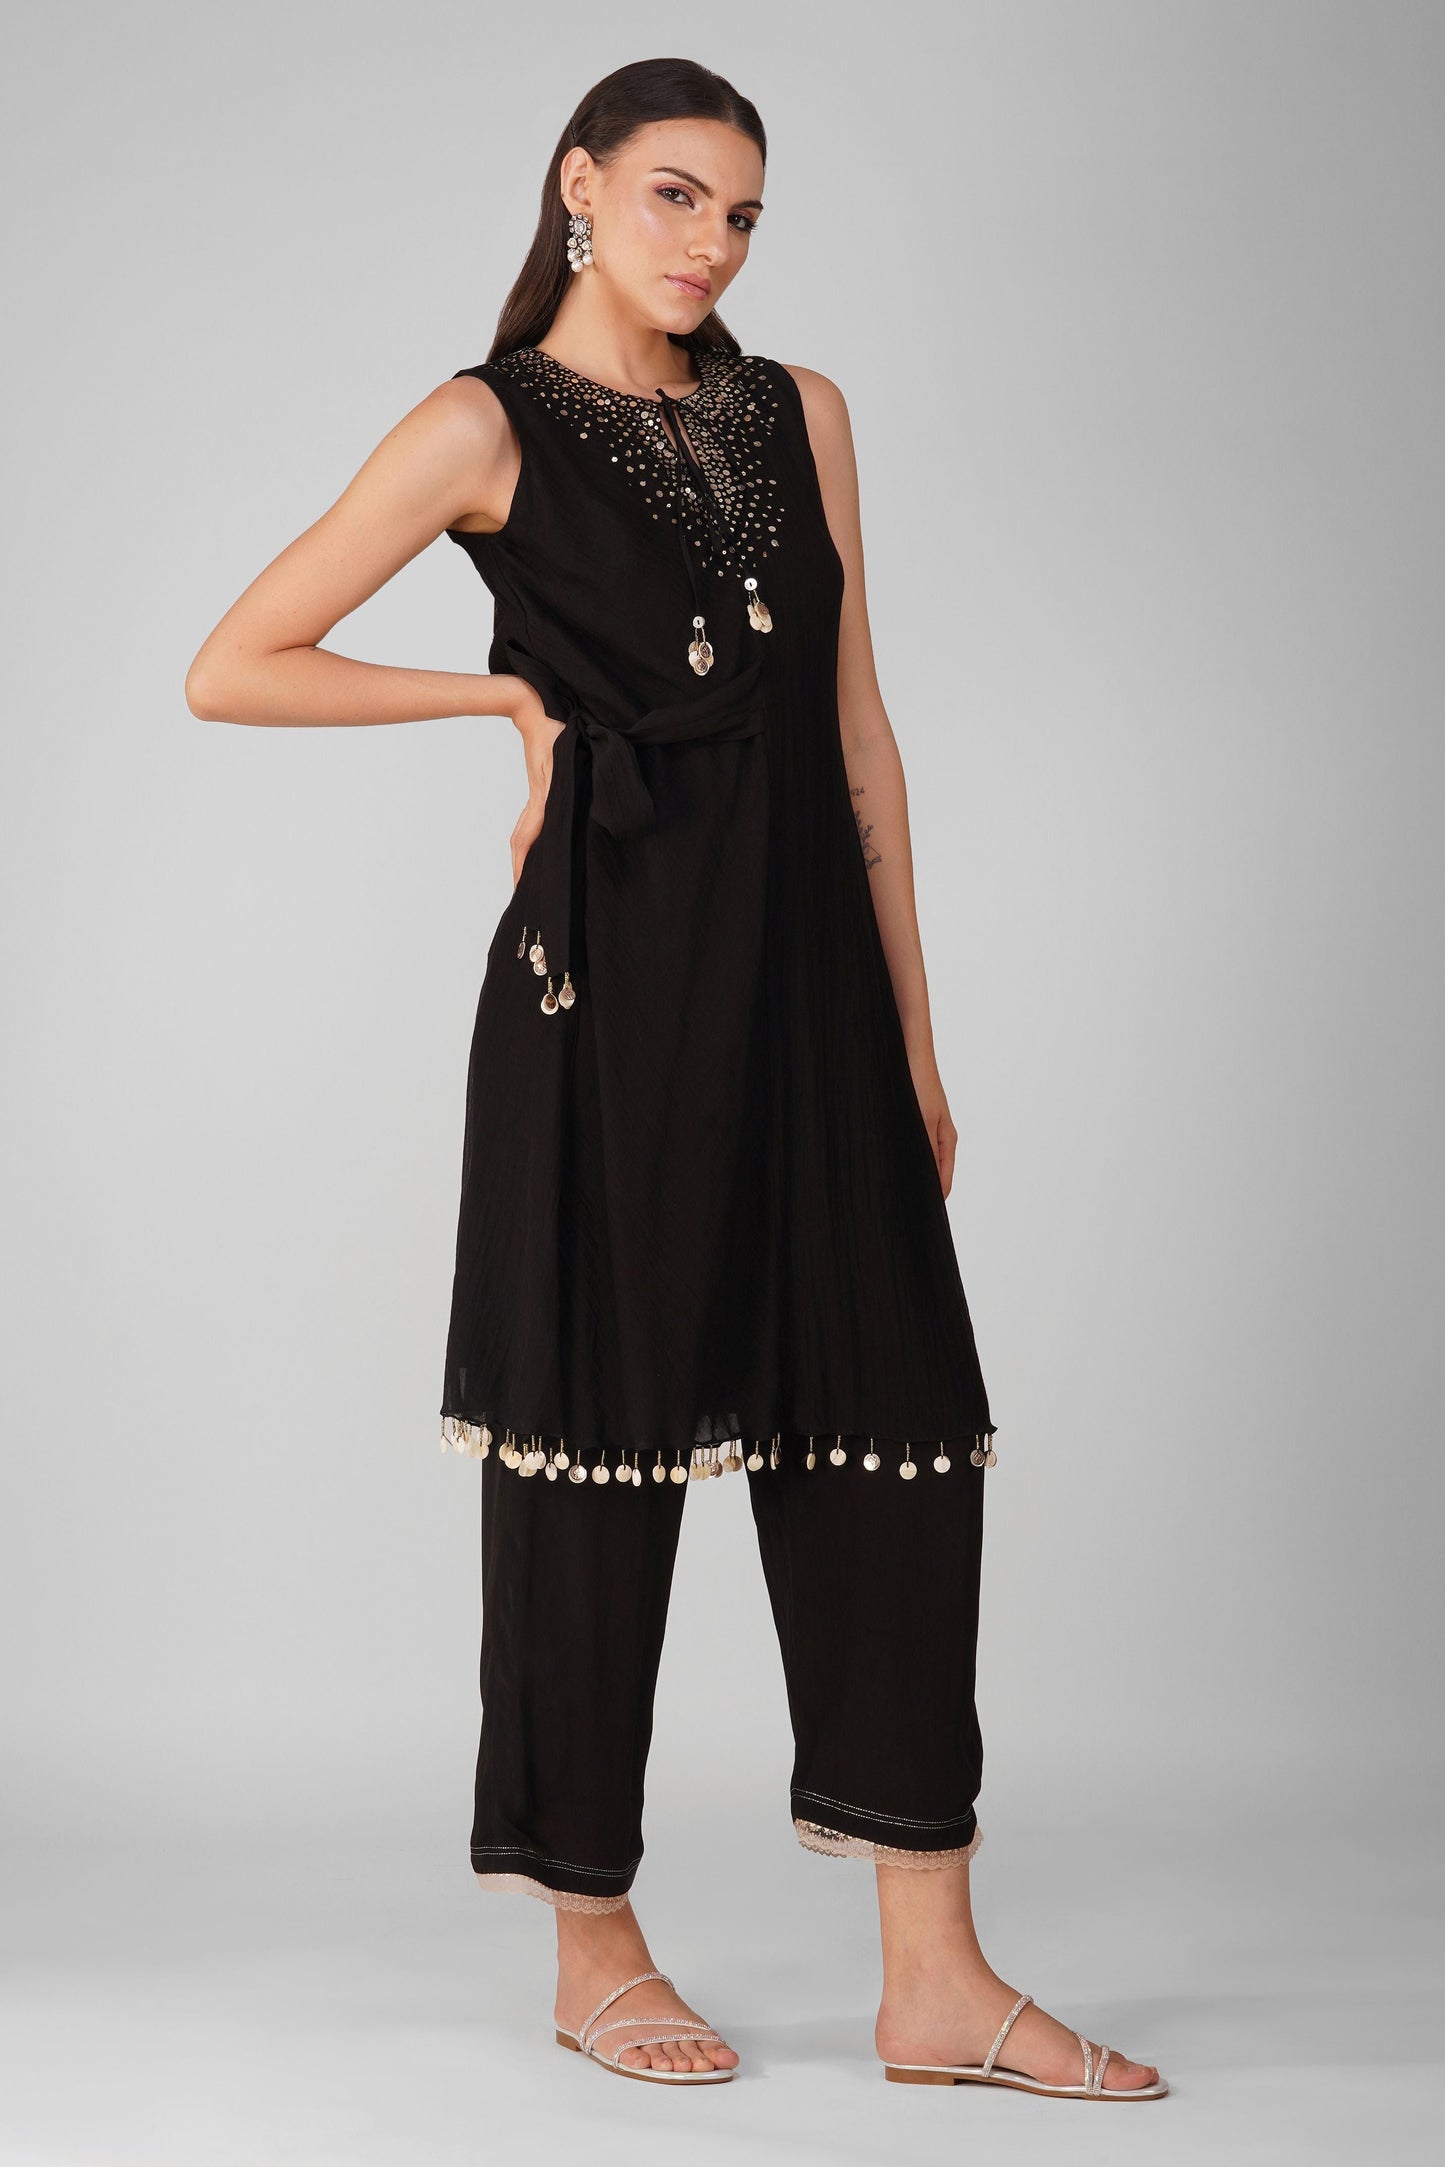 Black Chanderi Sleeveless Kurta Pant Set at Kamakhyaa by Devyani Mehrotra. This item is Black, Chanderi, Embellished, Indian Wear, Natural, Party Wear, Regular Fit, Womenswear